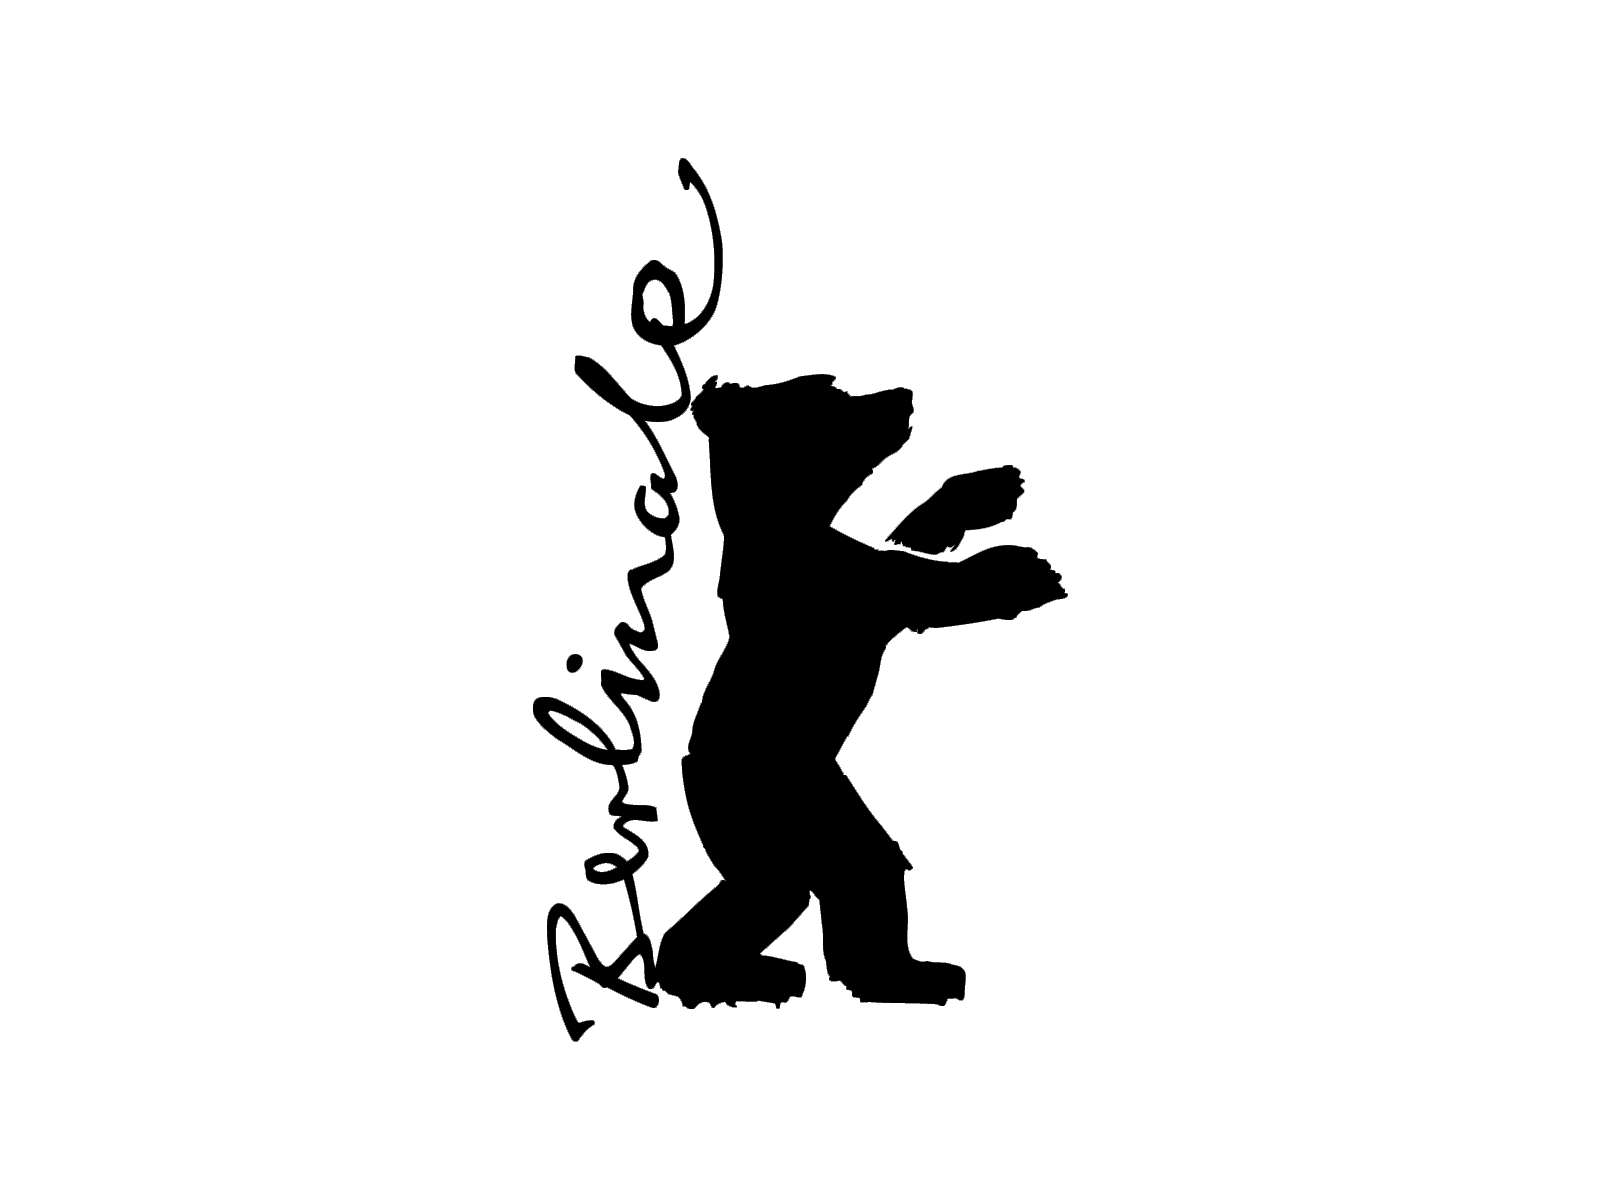 Berlinale-logo.png